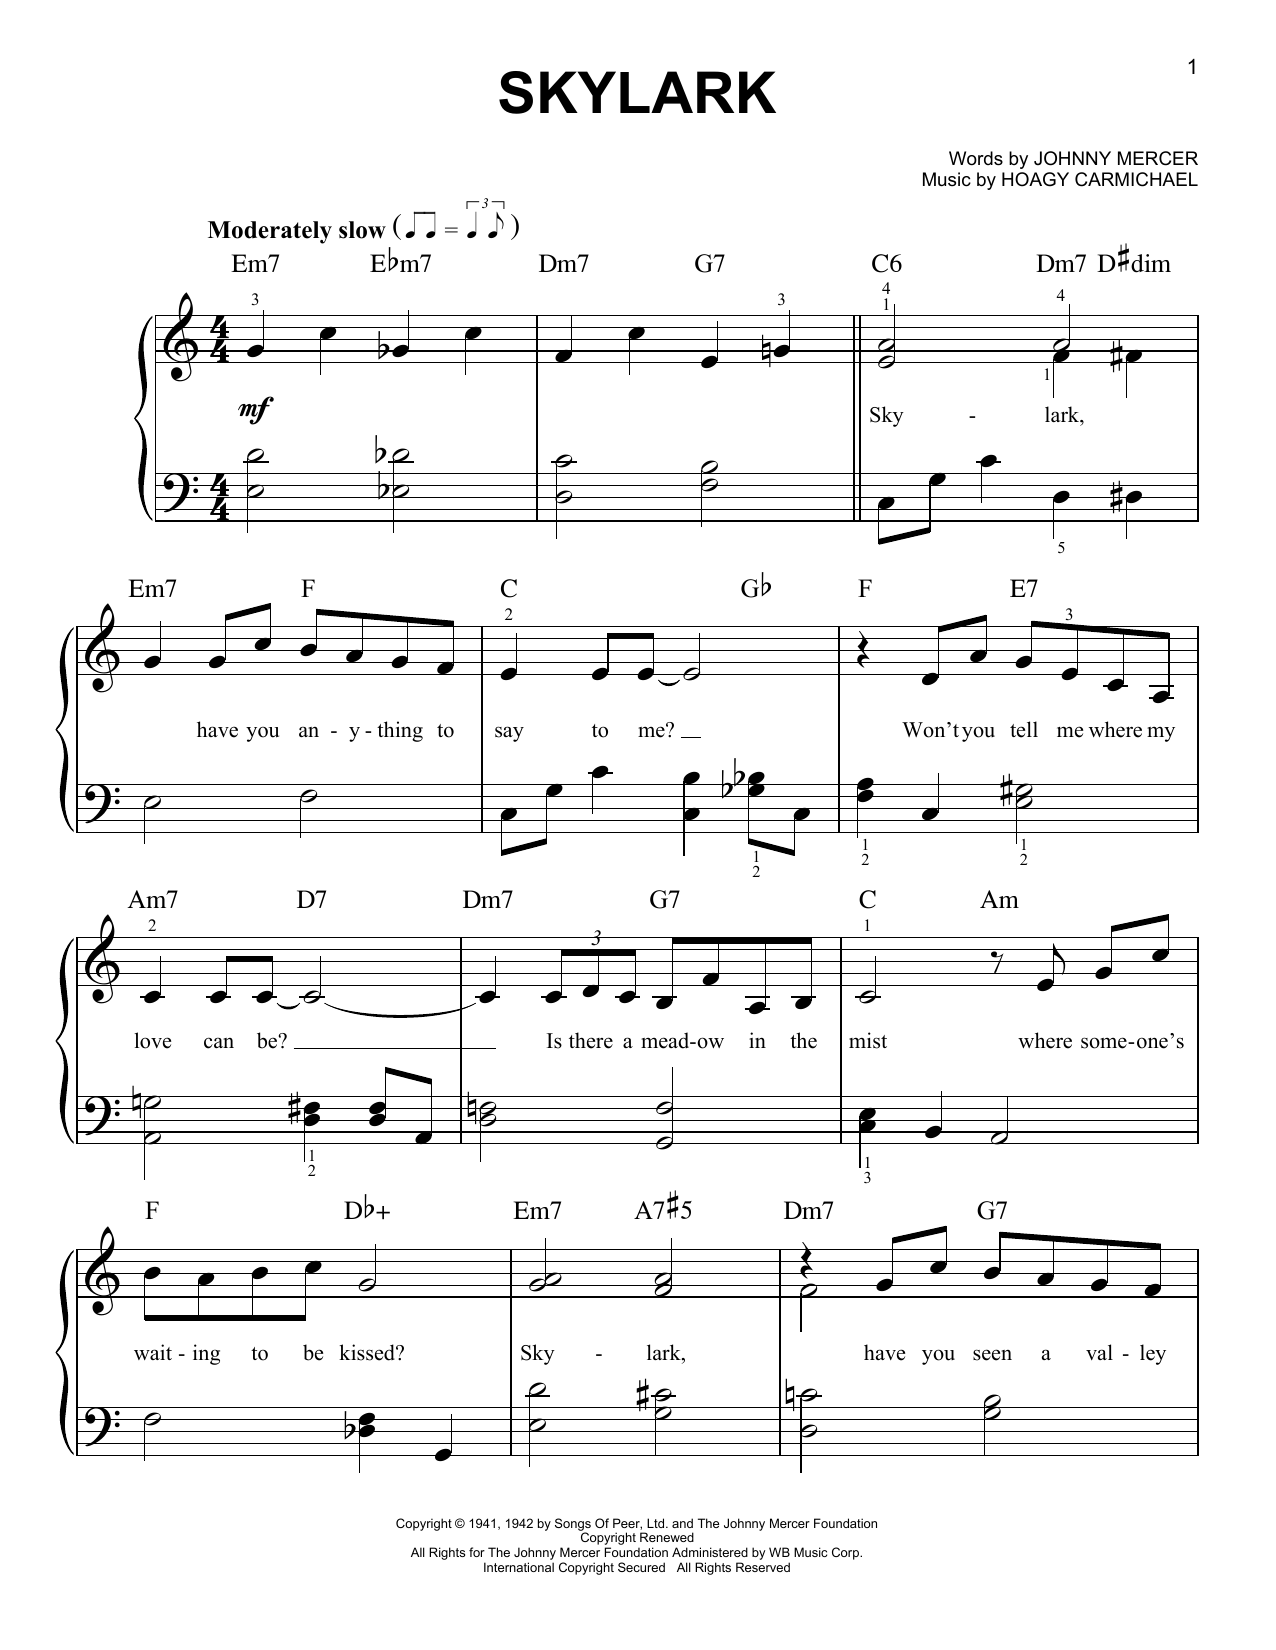 Hoagy Carmichael Skylark Sheet Music Notes & Chords for Viola - Download or Print PDF